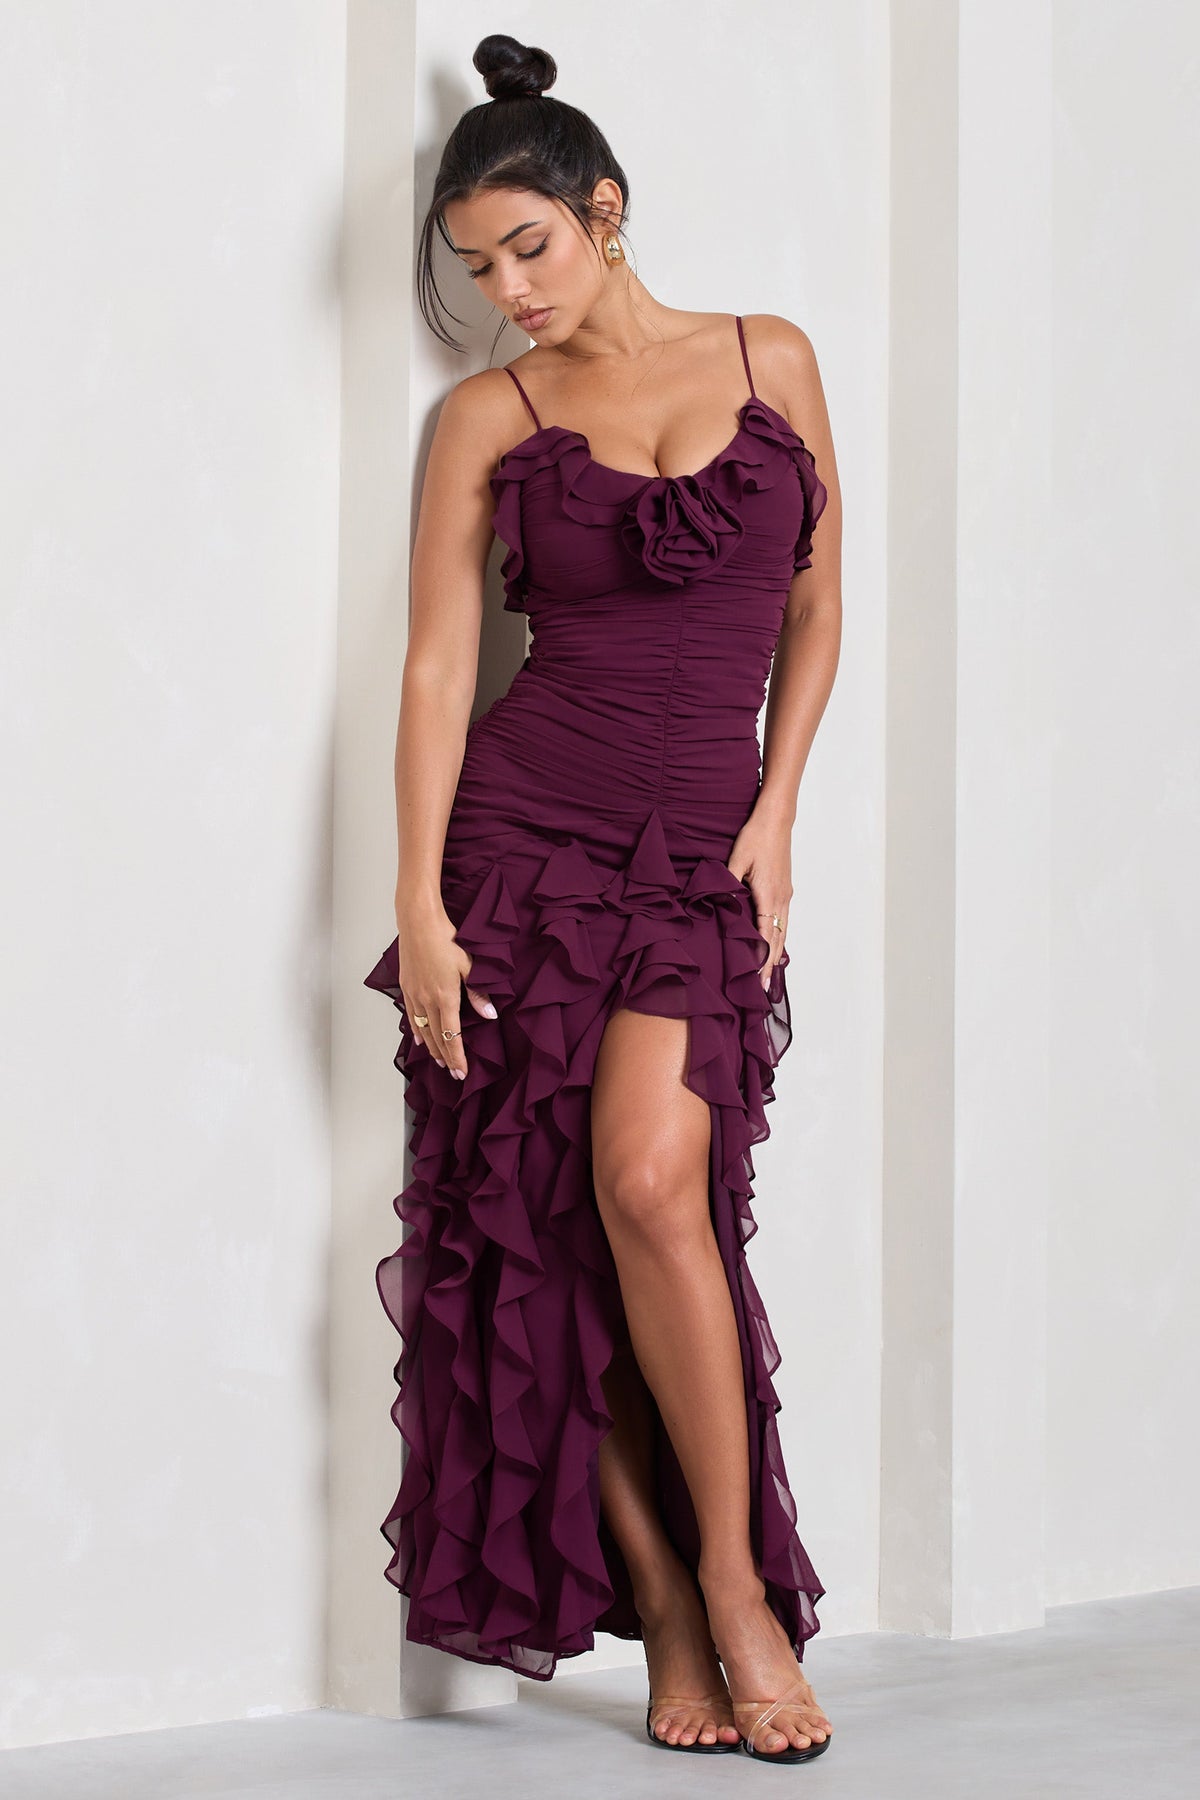 Plum Purple Bridesmaid Dress, Burgundy Maxi Dress